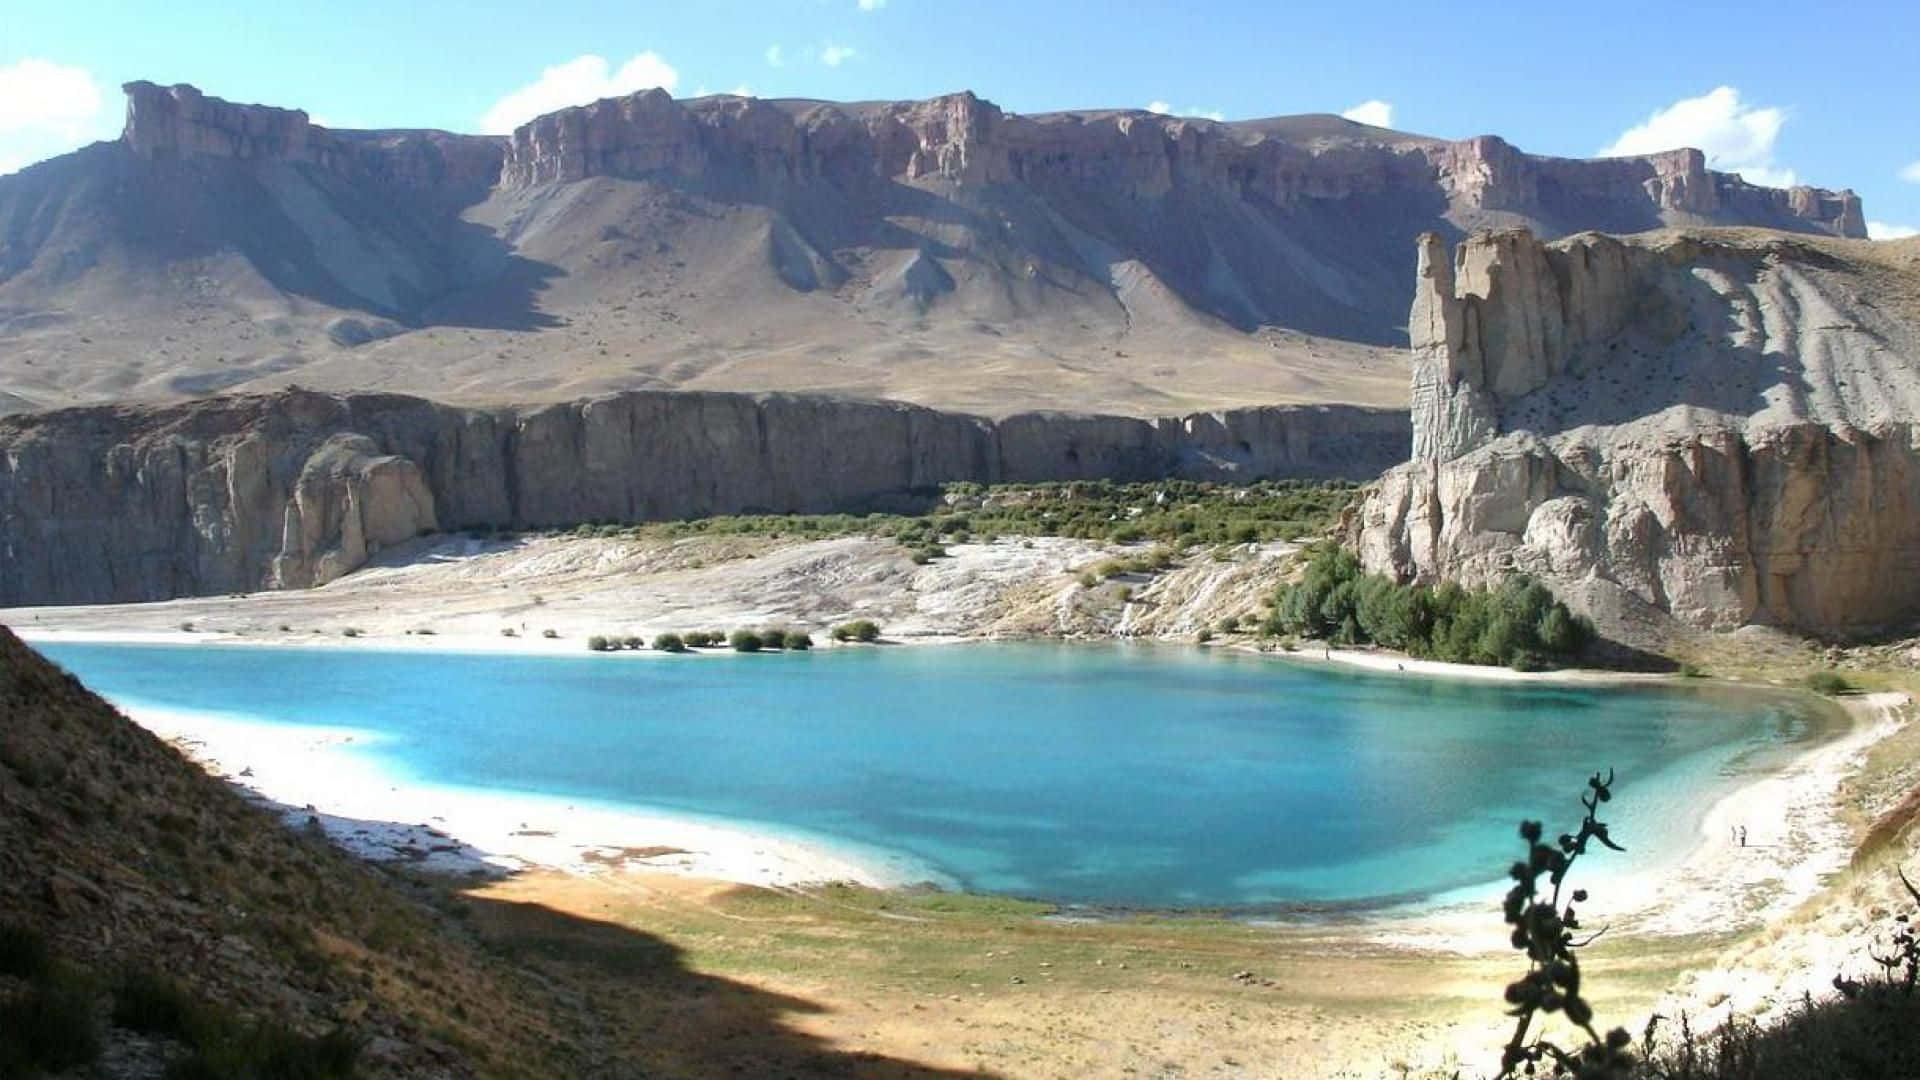 Afghanistan Background